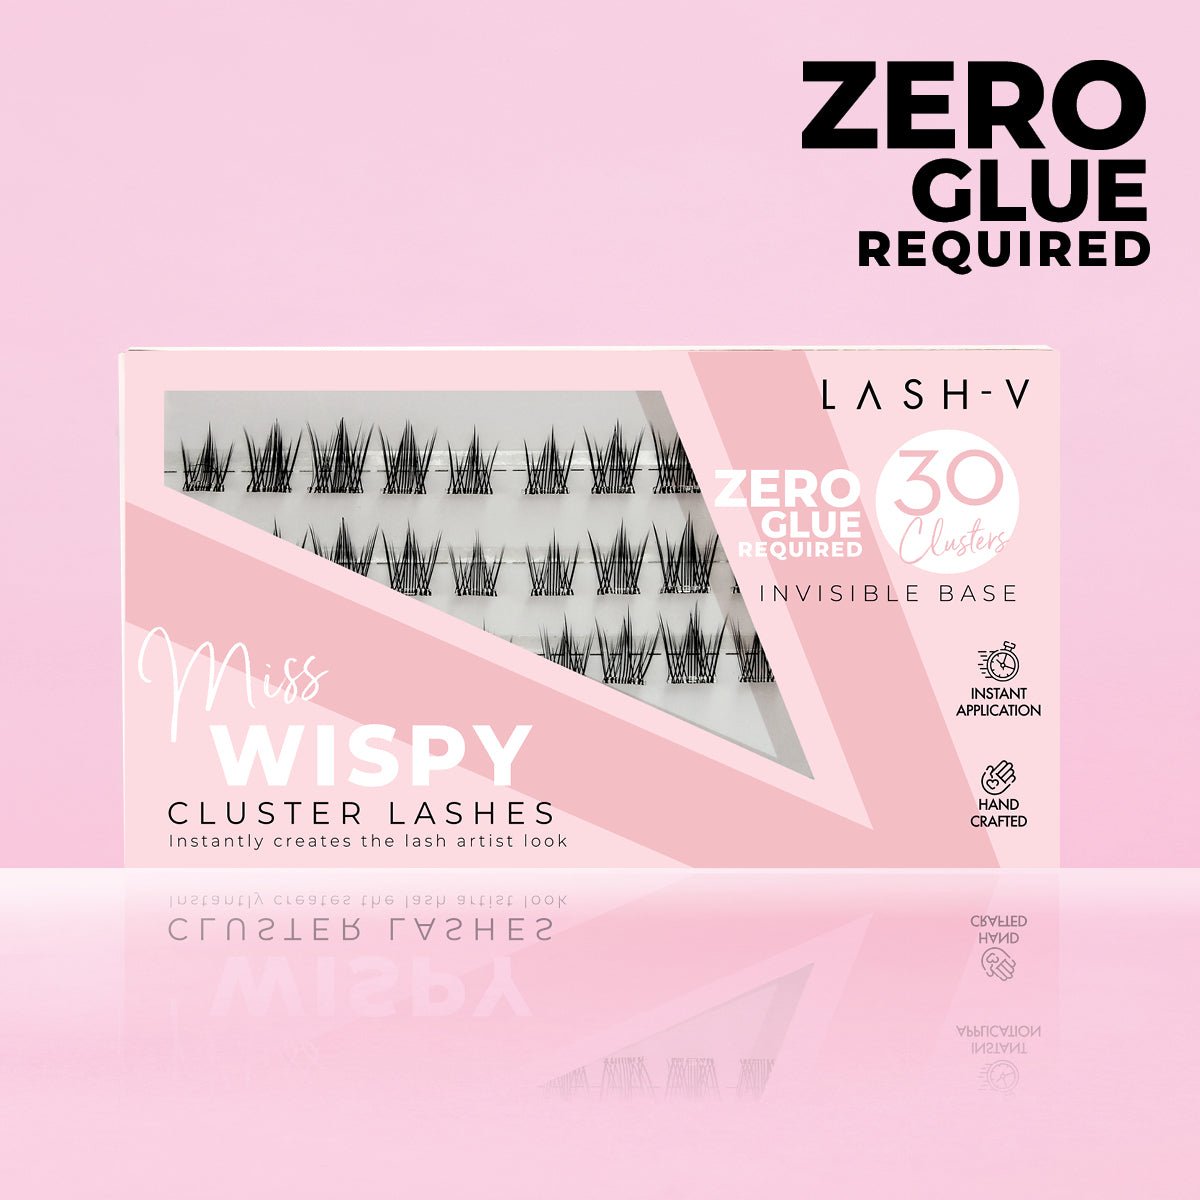 Miss Wispy Cluster Lashes - No Glue - 30 Clusters . - LASH V